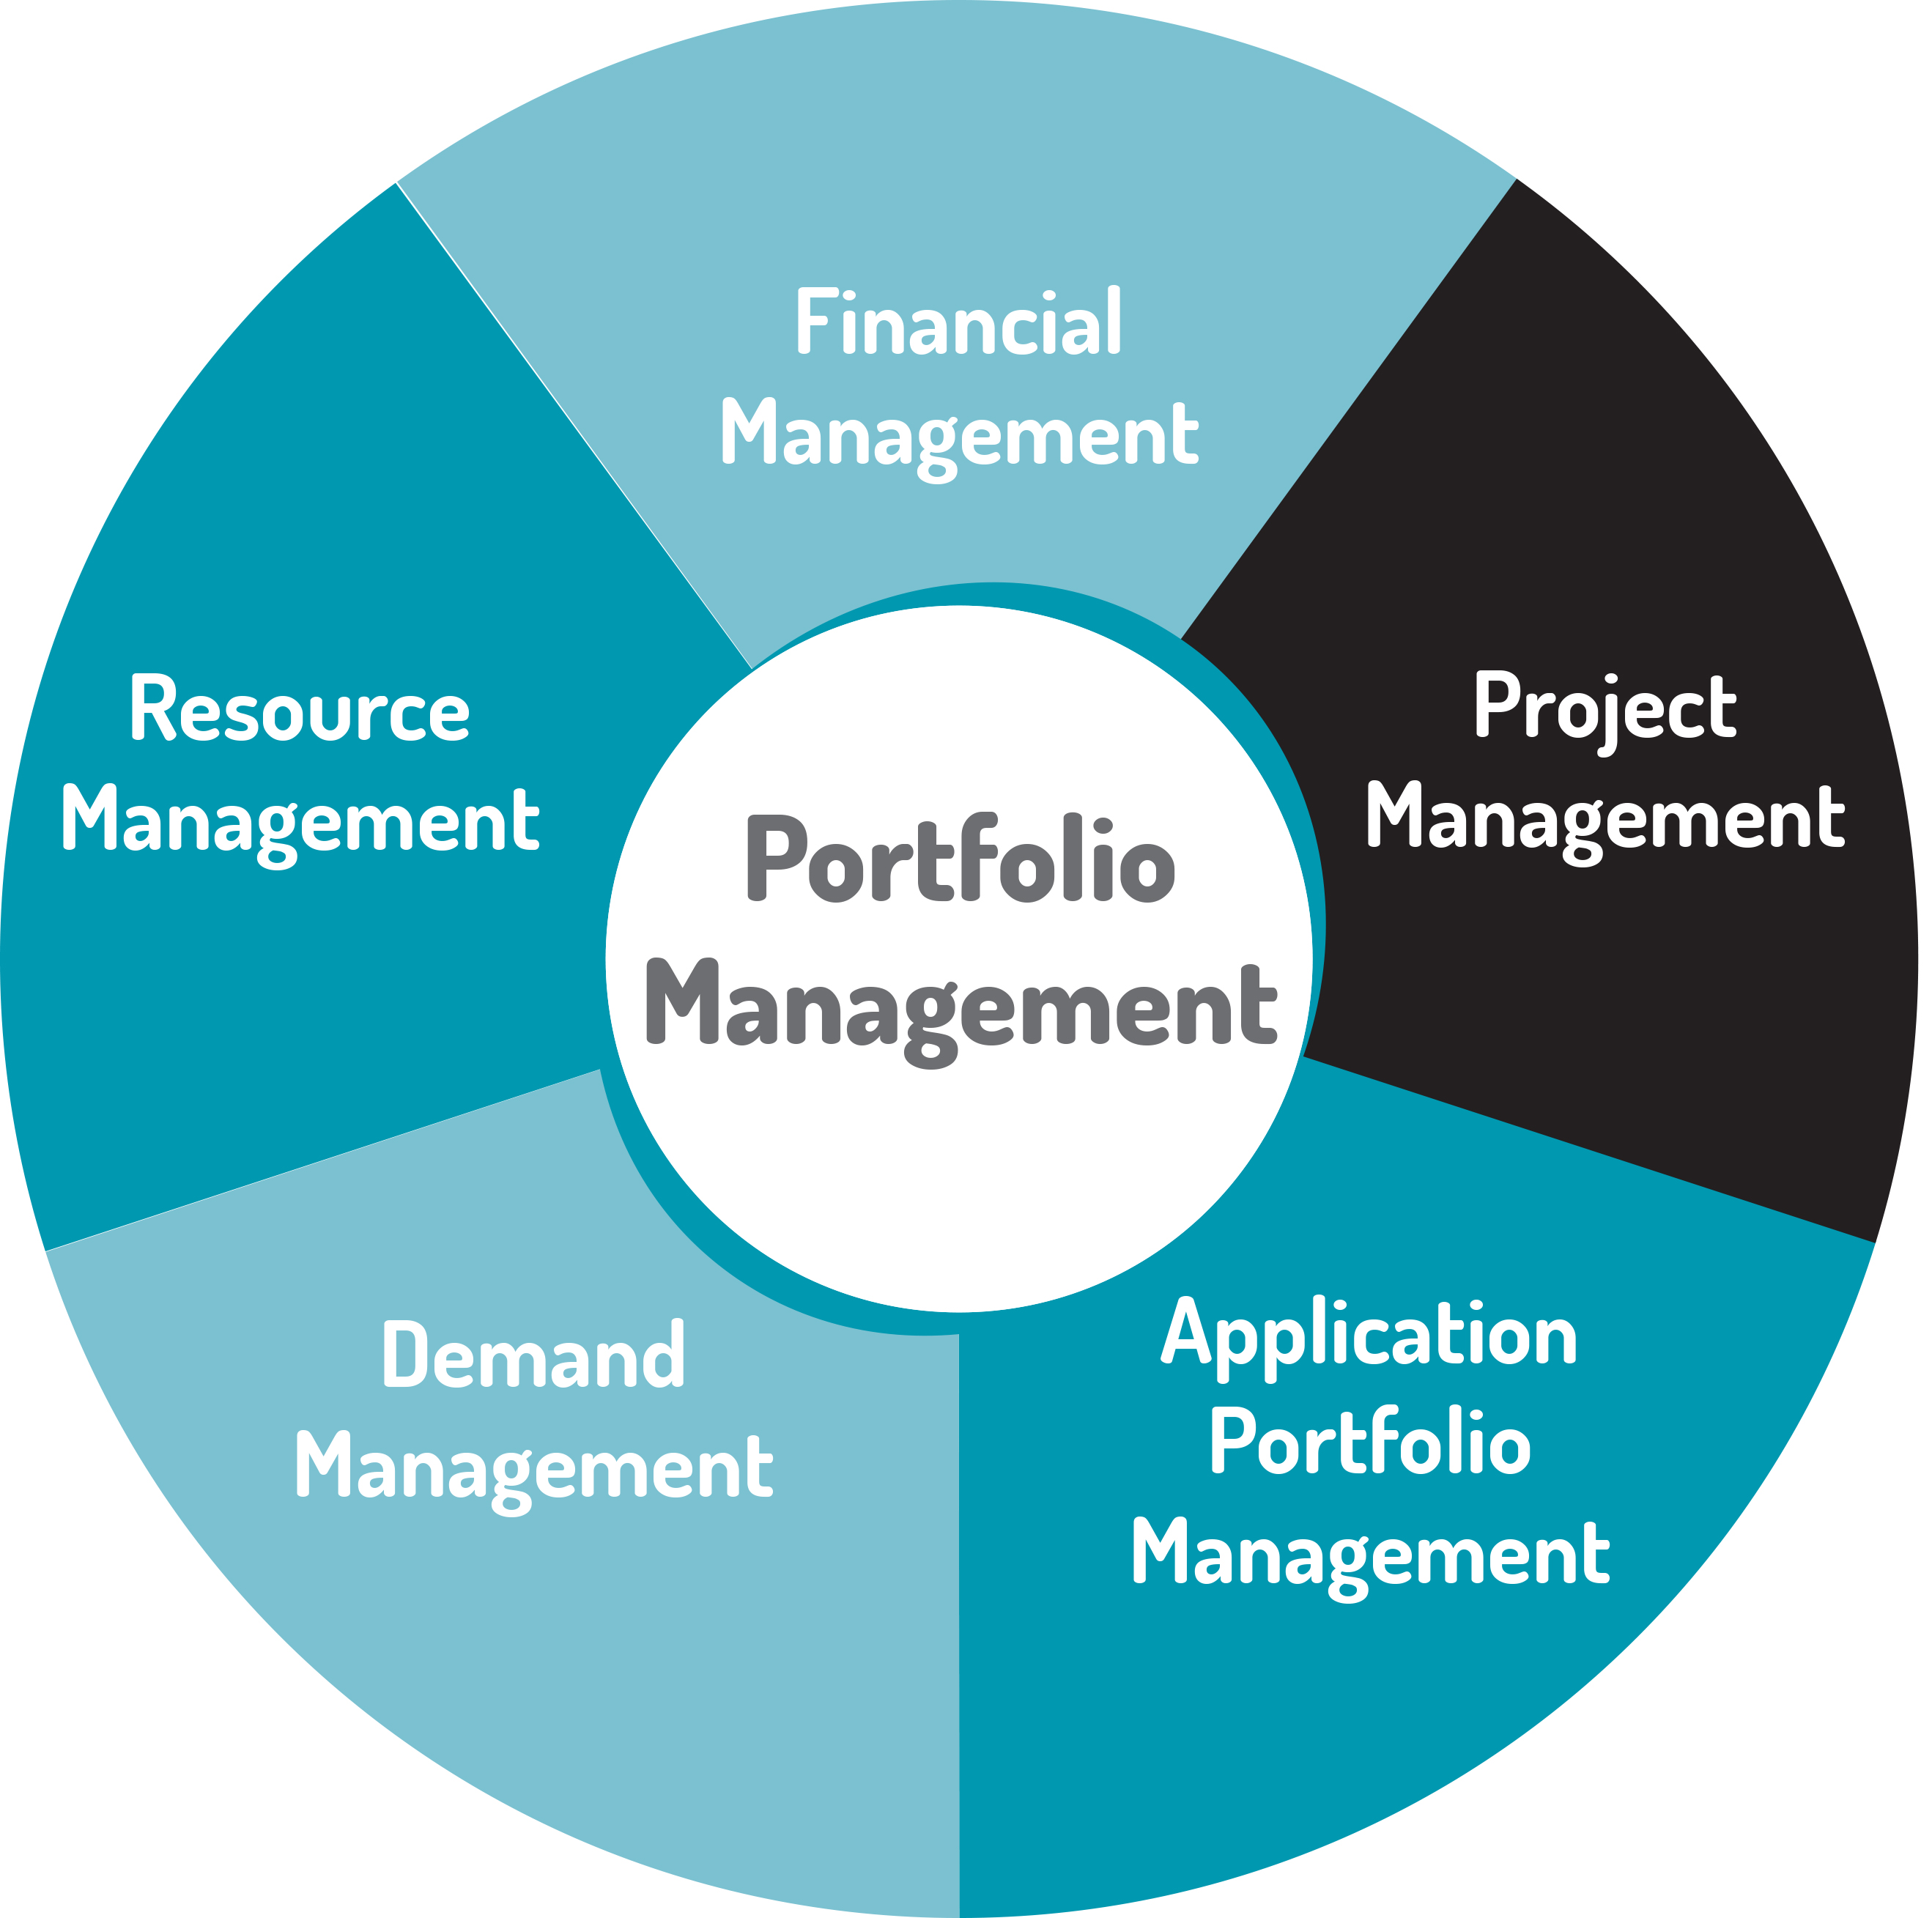 Project and portfolio management